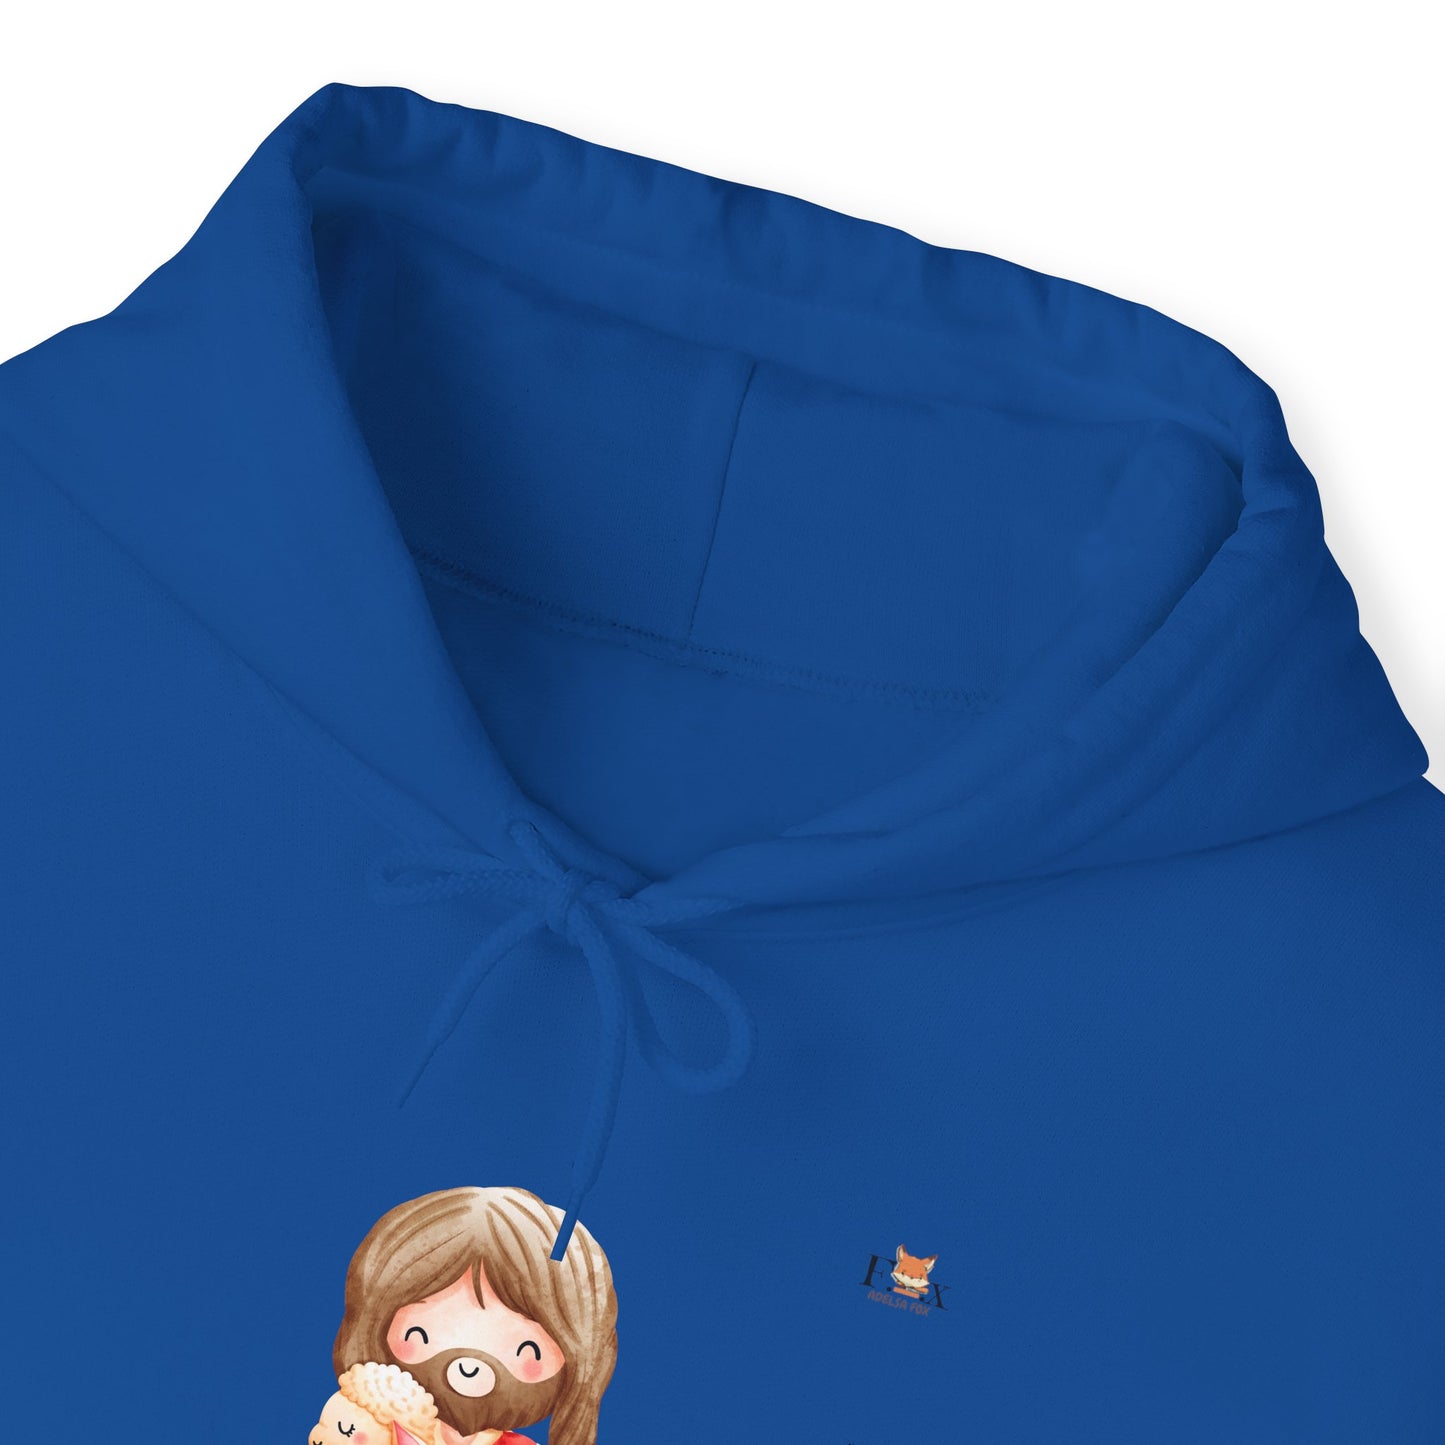 The Shepherd -Hoodie Sweatshirt